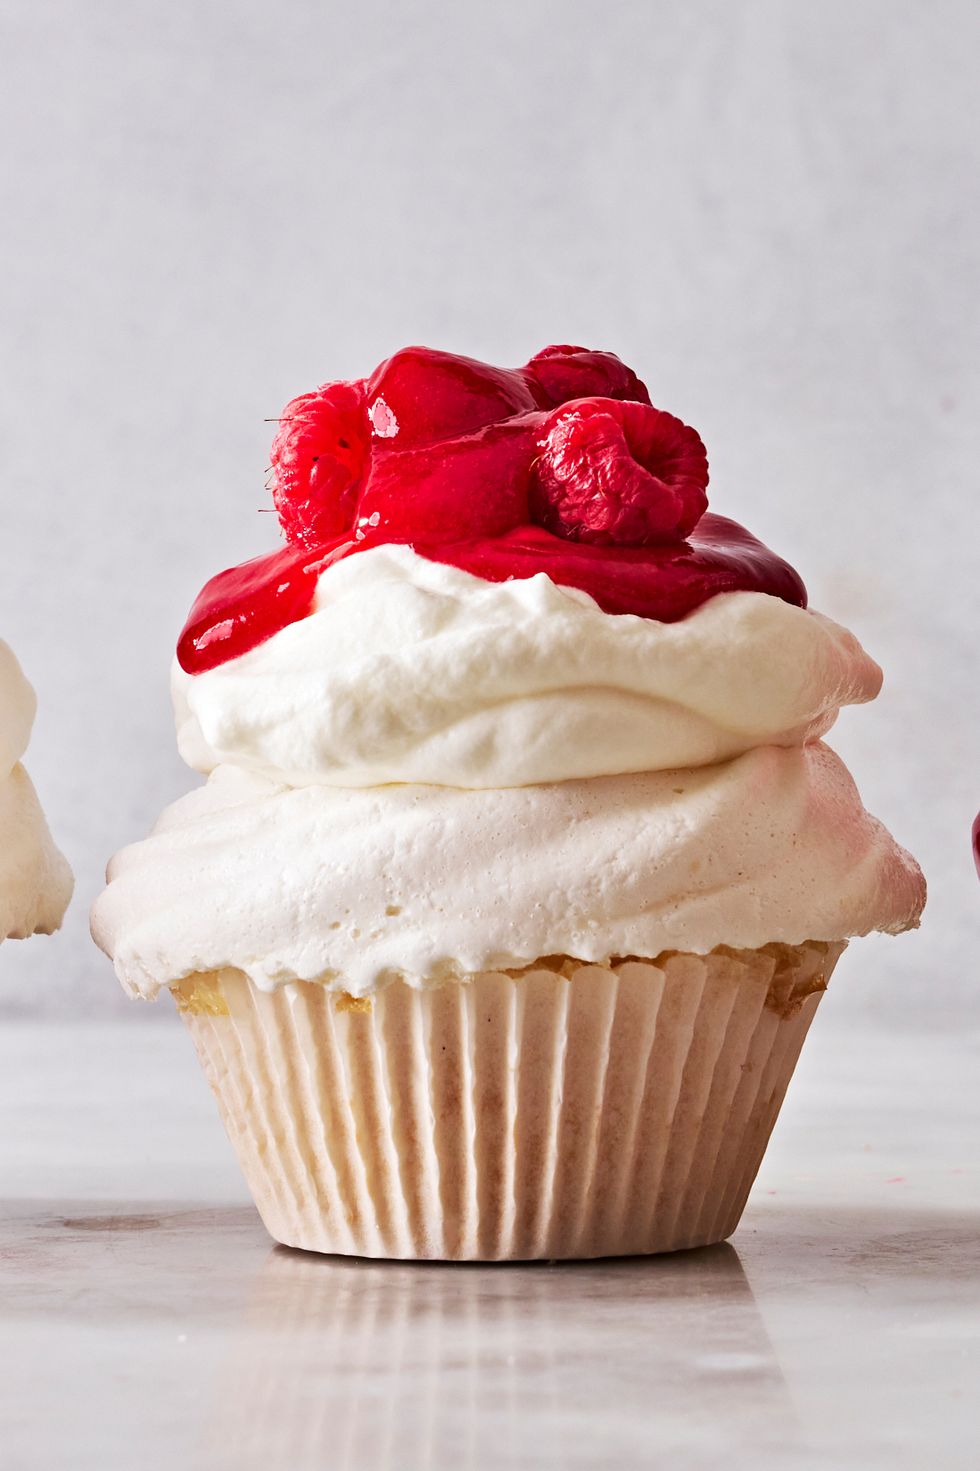 55 Best Cupcake Recipes - How To Make Homemade Cupcakes